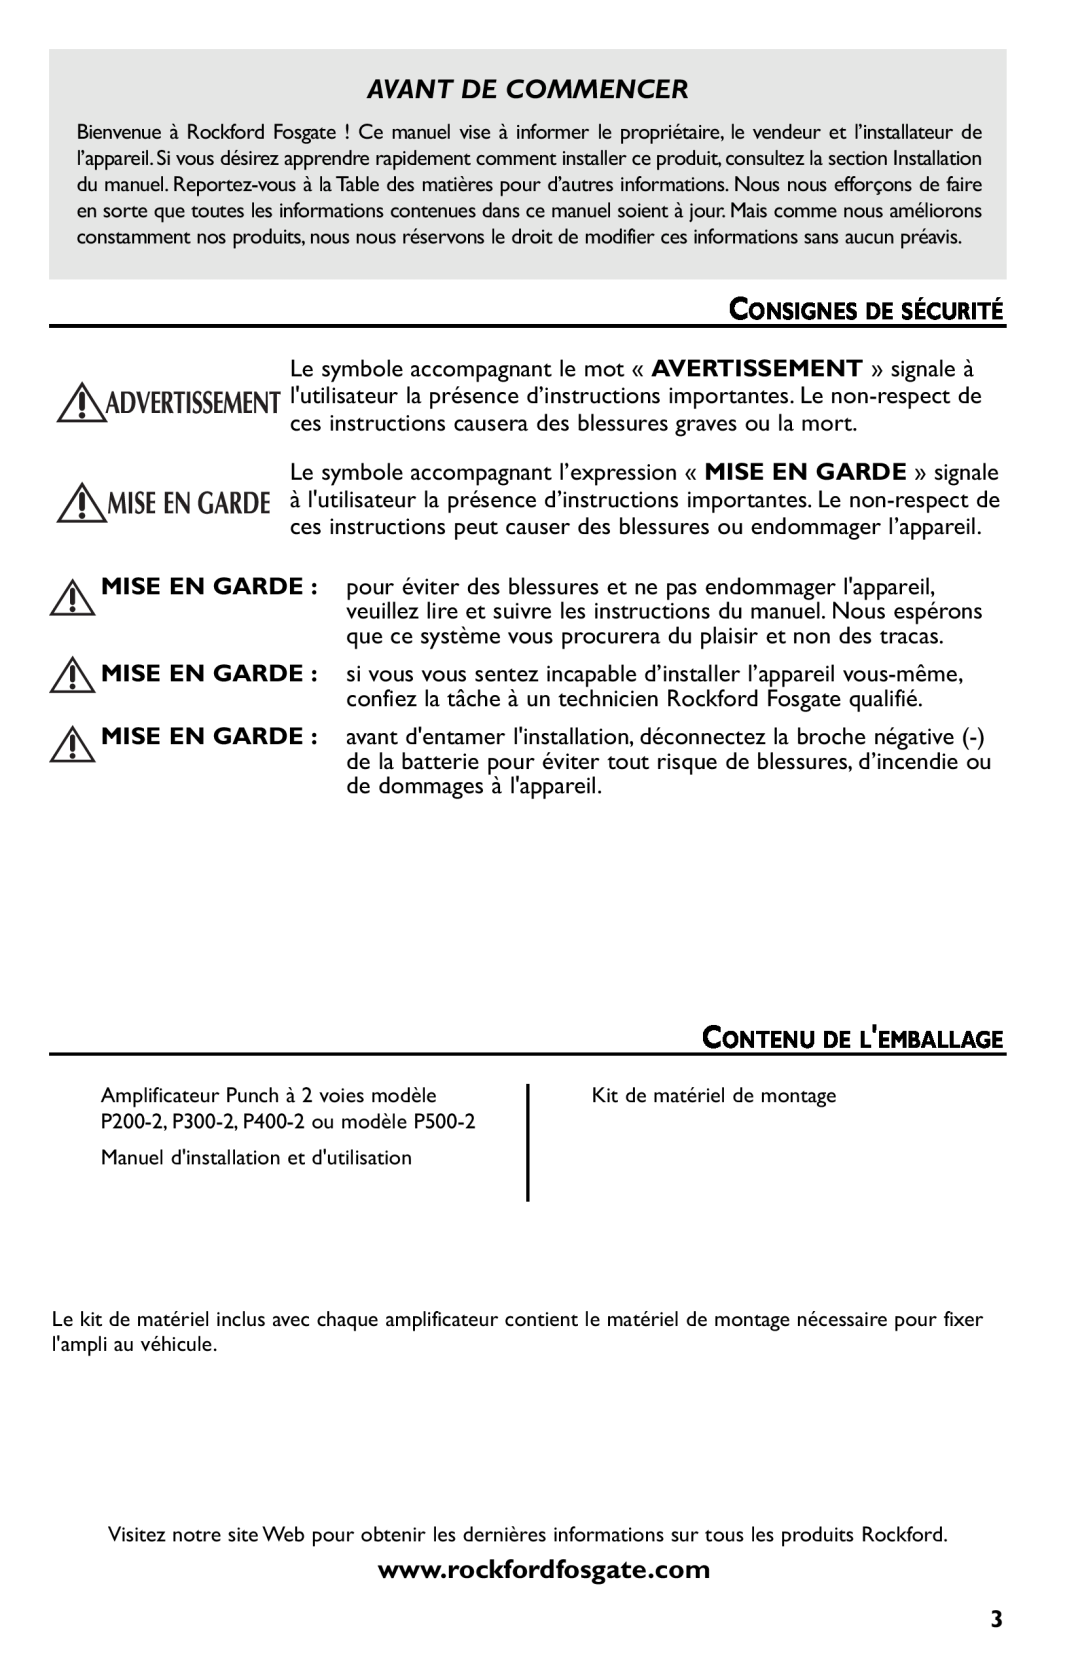 Rockford Fosgate p3002 manual Avant De Commencer, Consignes De Sécurité, Contenu De Lemballage 